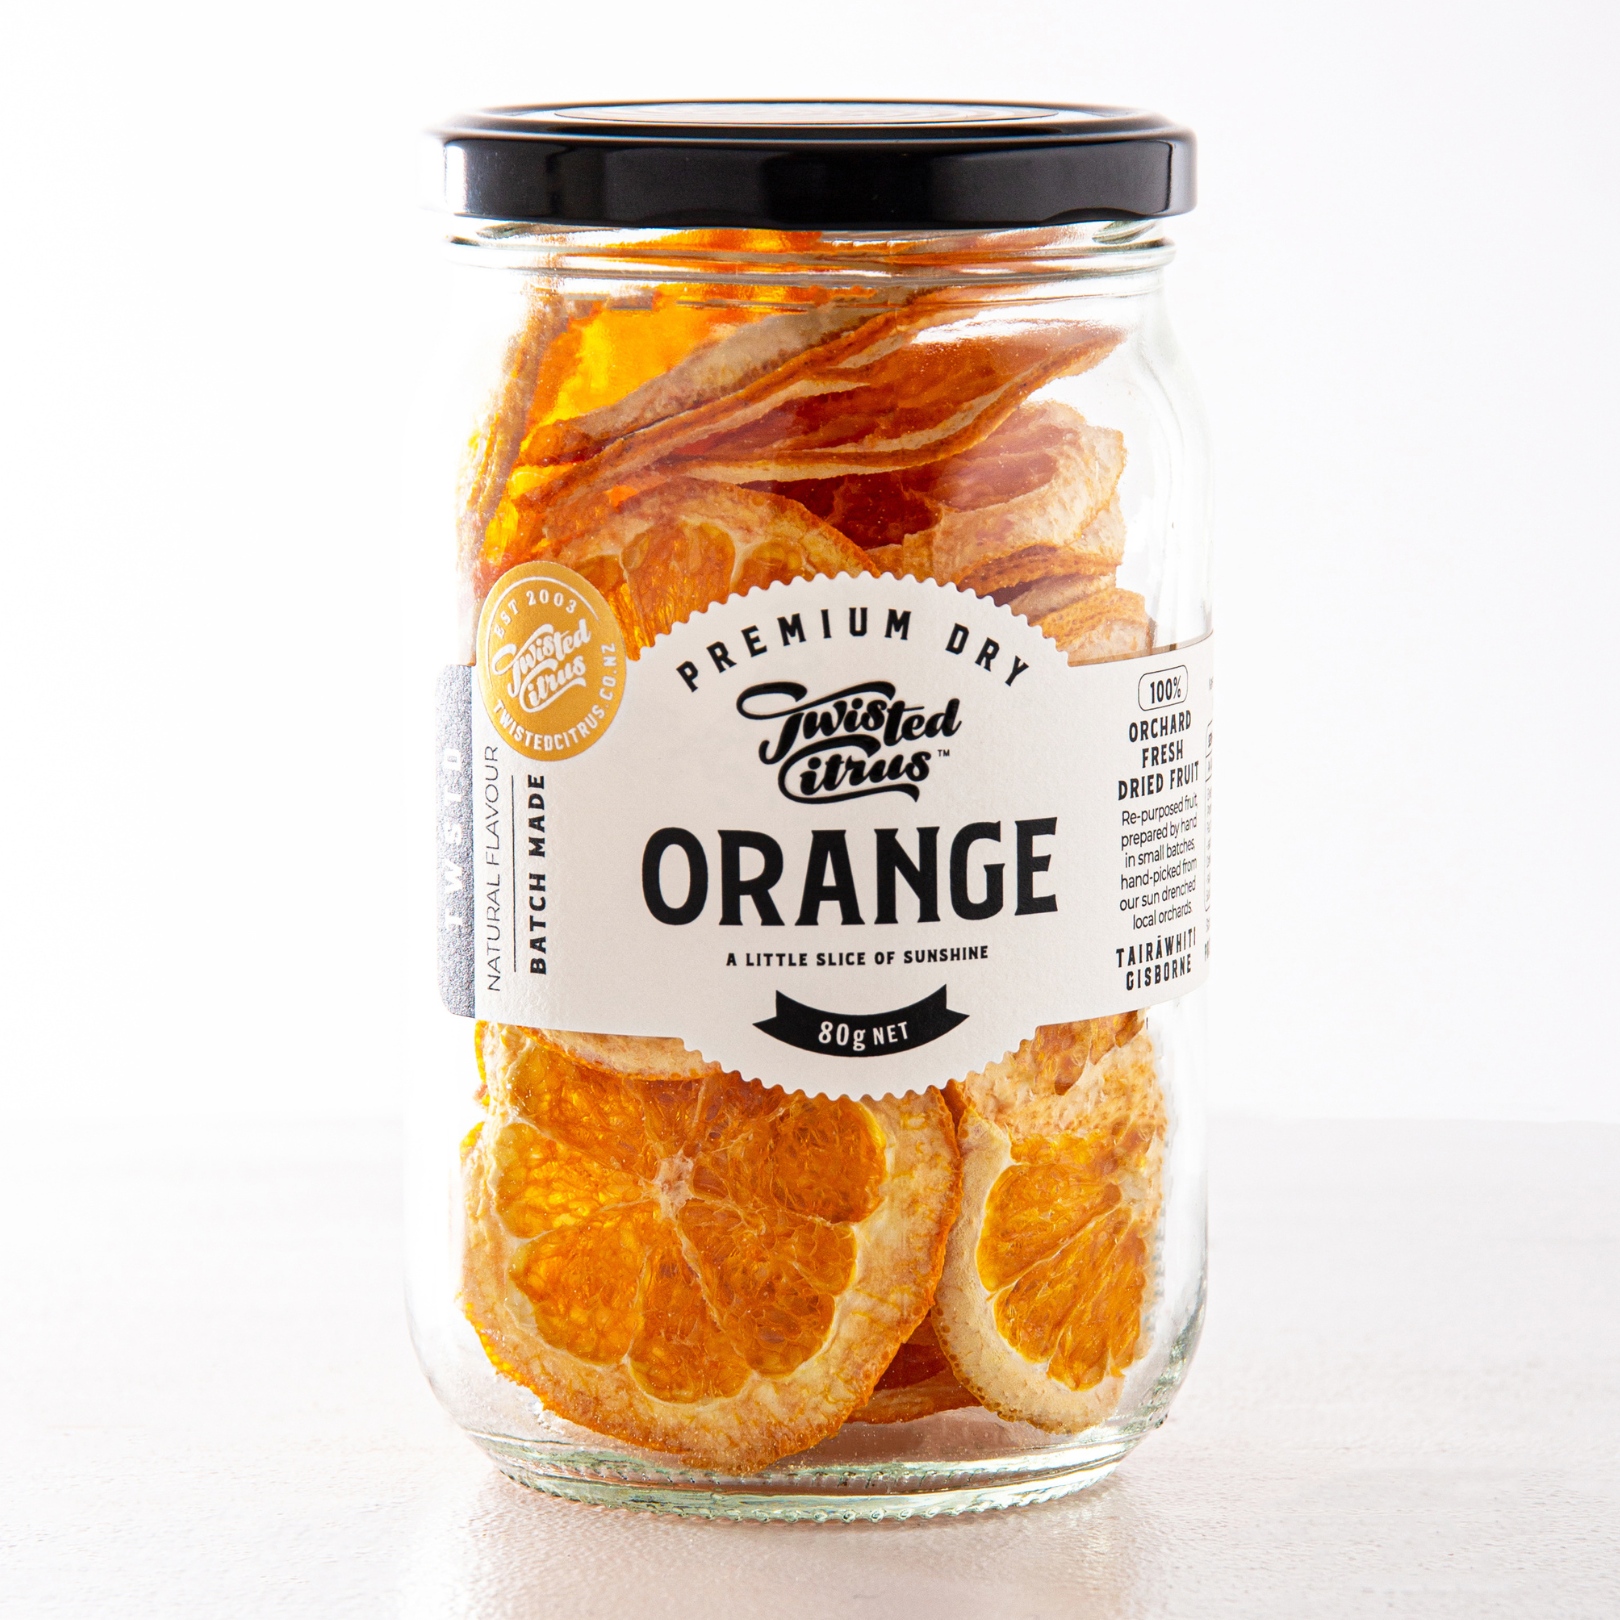 Buy Twisted Dried Fruit - Orange Online NZ